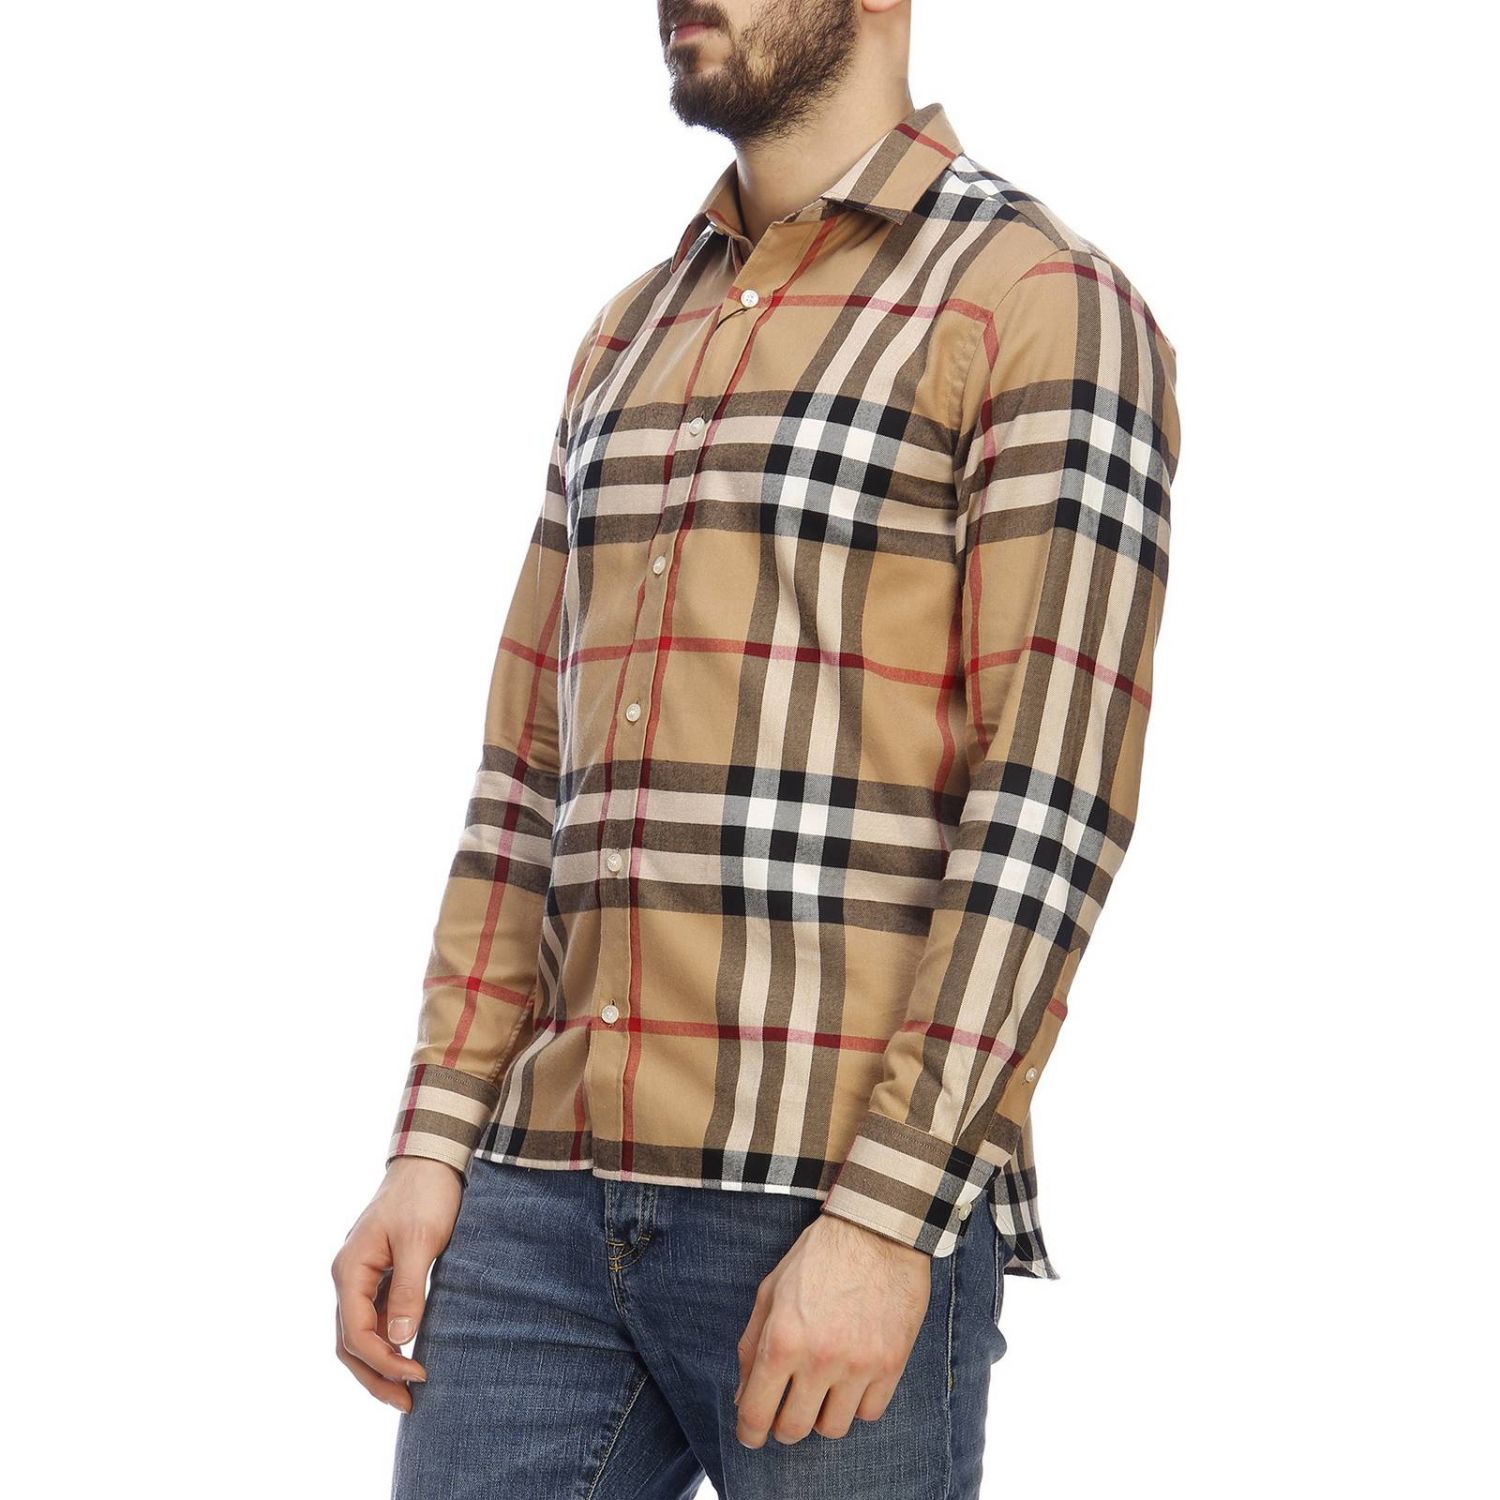 Burberry Outlet: shirt for man - Camel | Burberry shirt 8004881 online ...